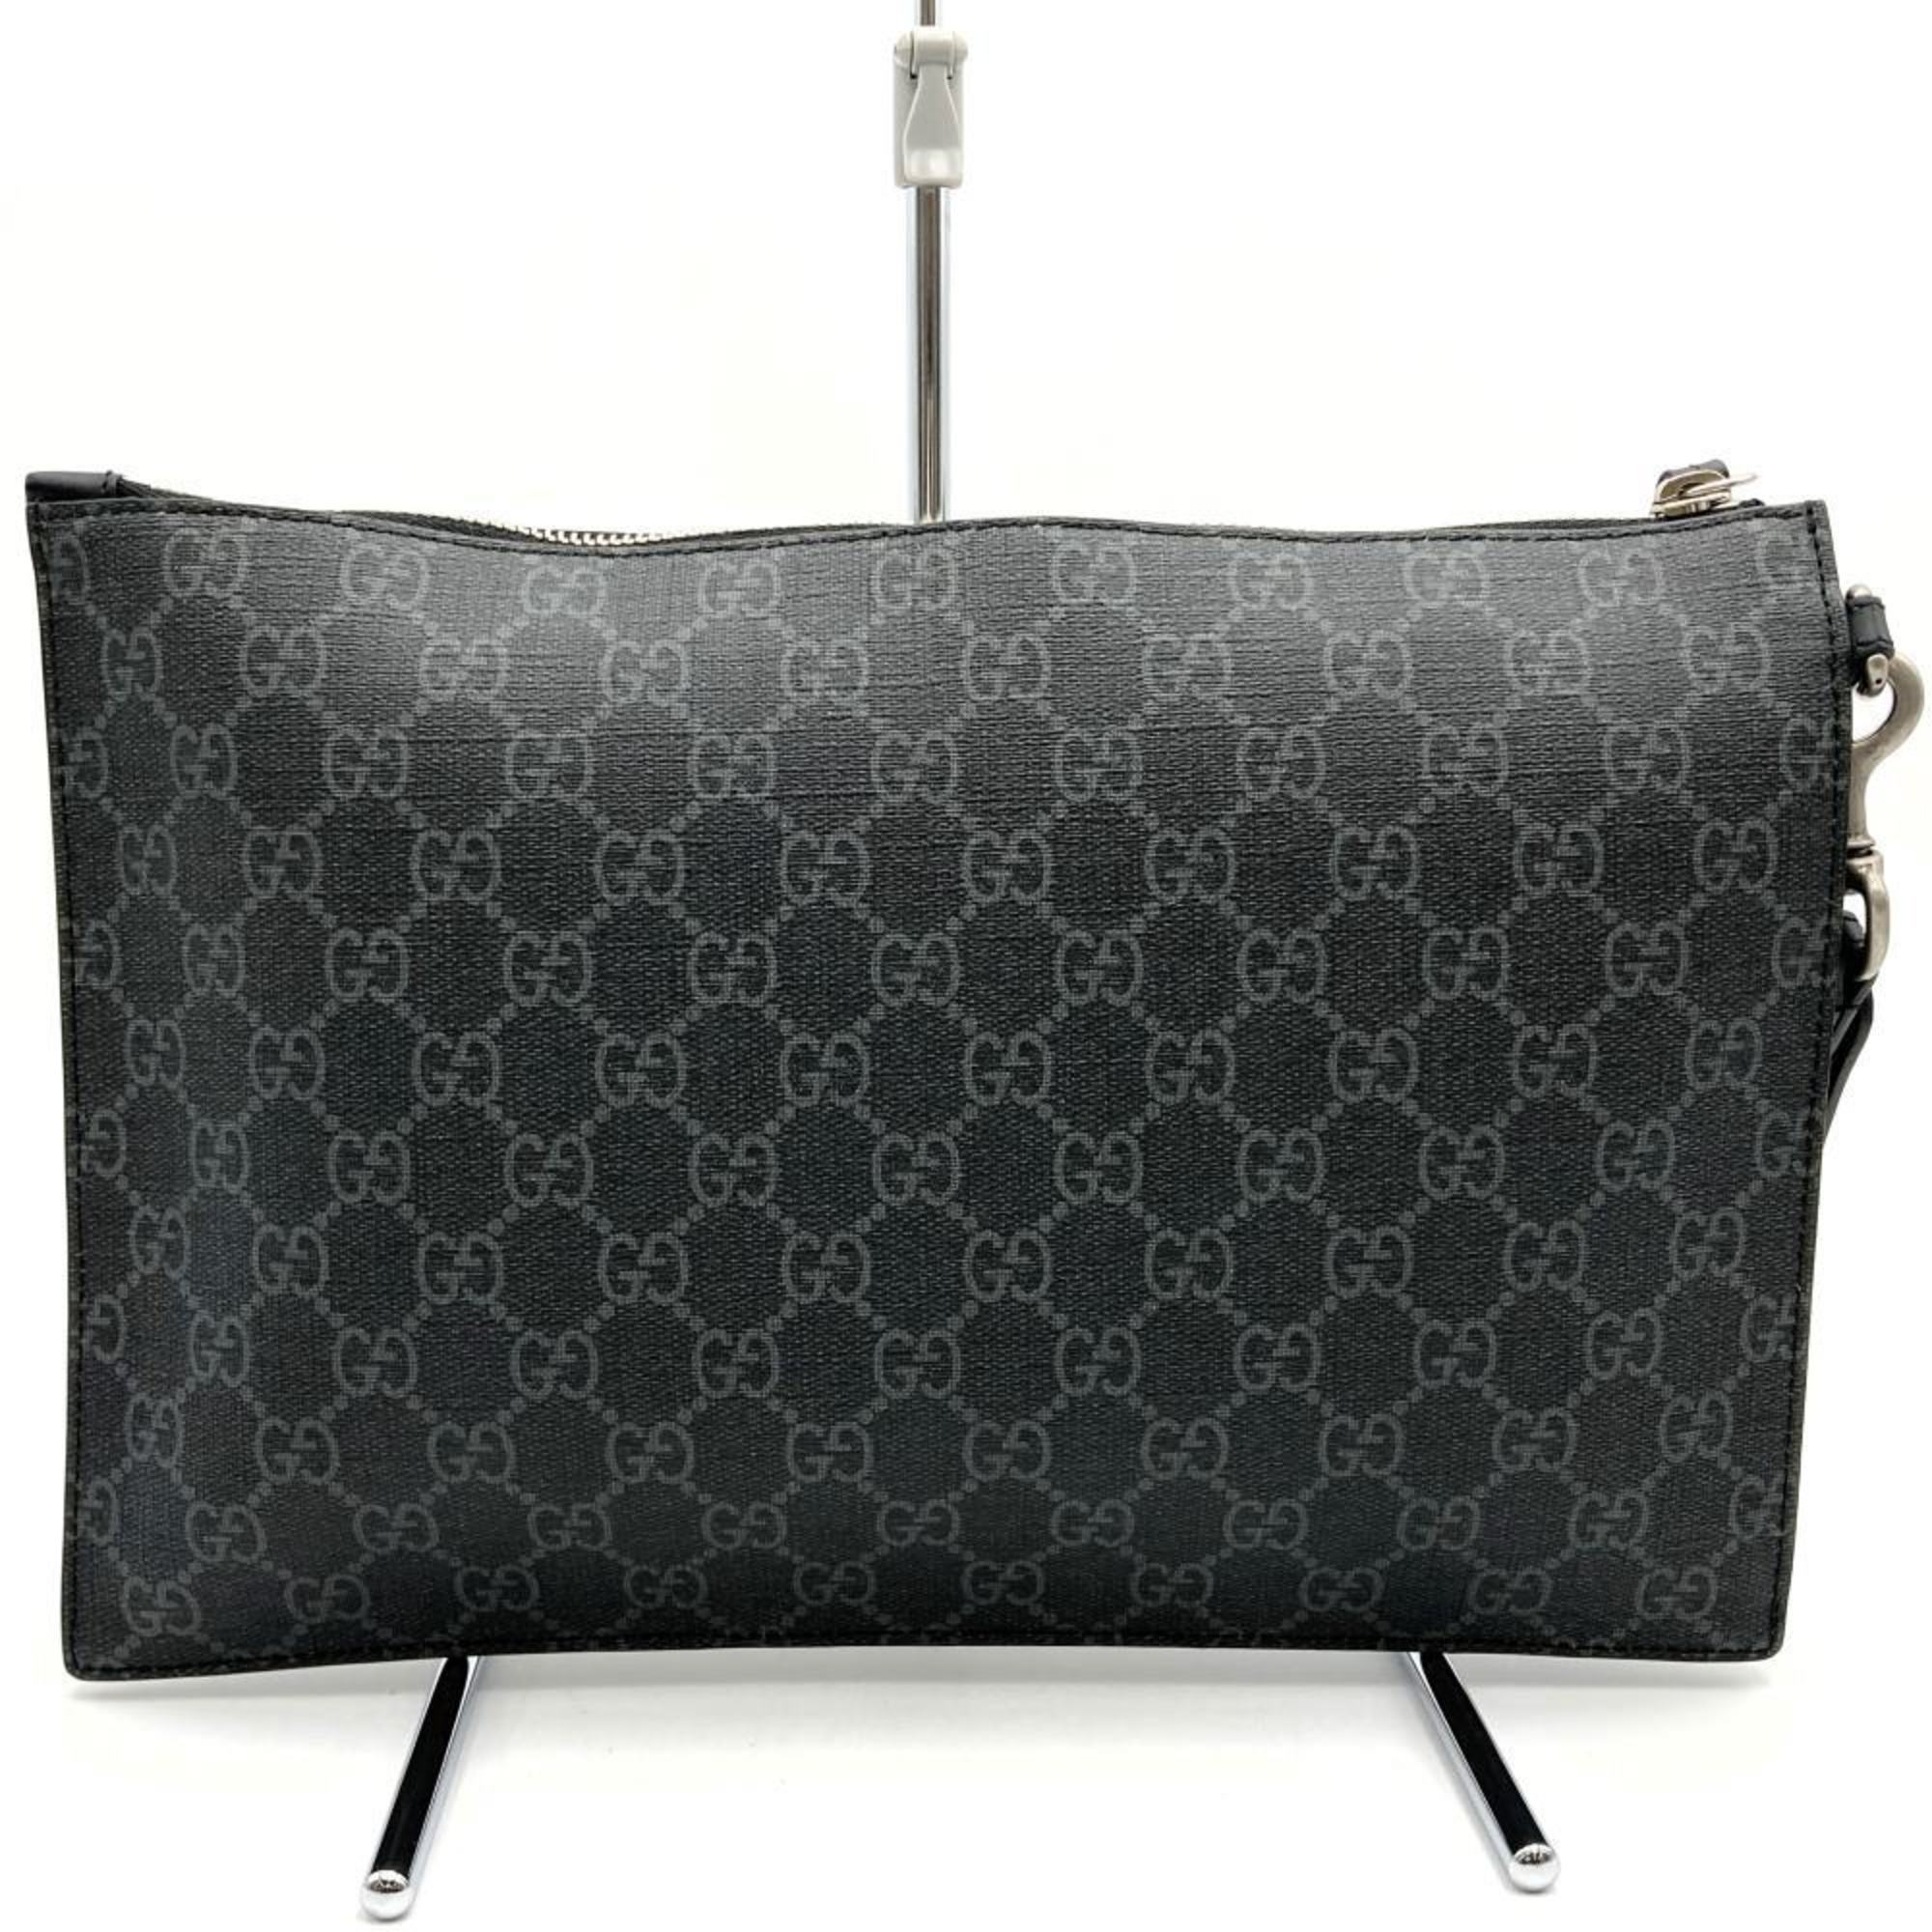 Gucci clutch bag, second king snake, snake pattern, black, GG Supreme, 473904, GUCCI